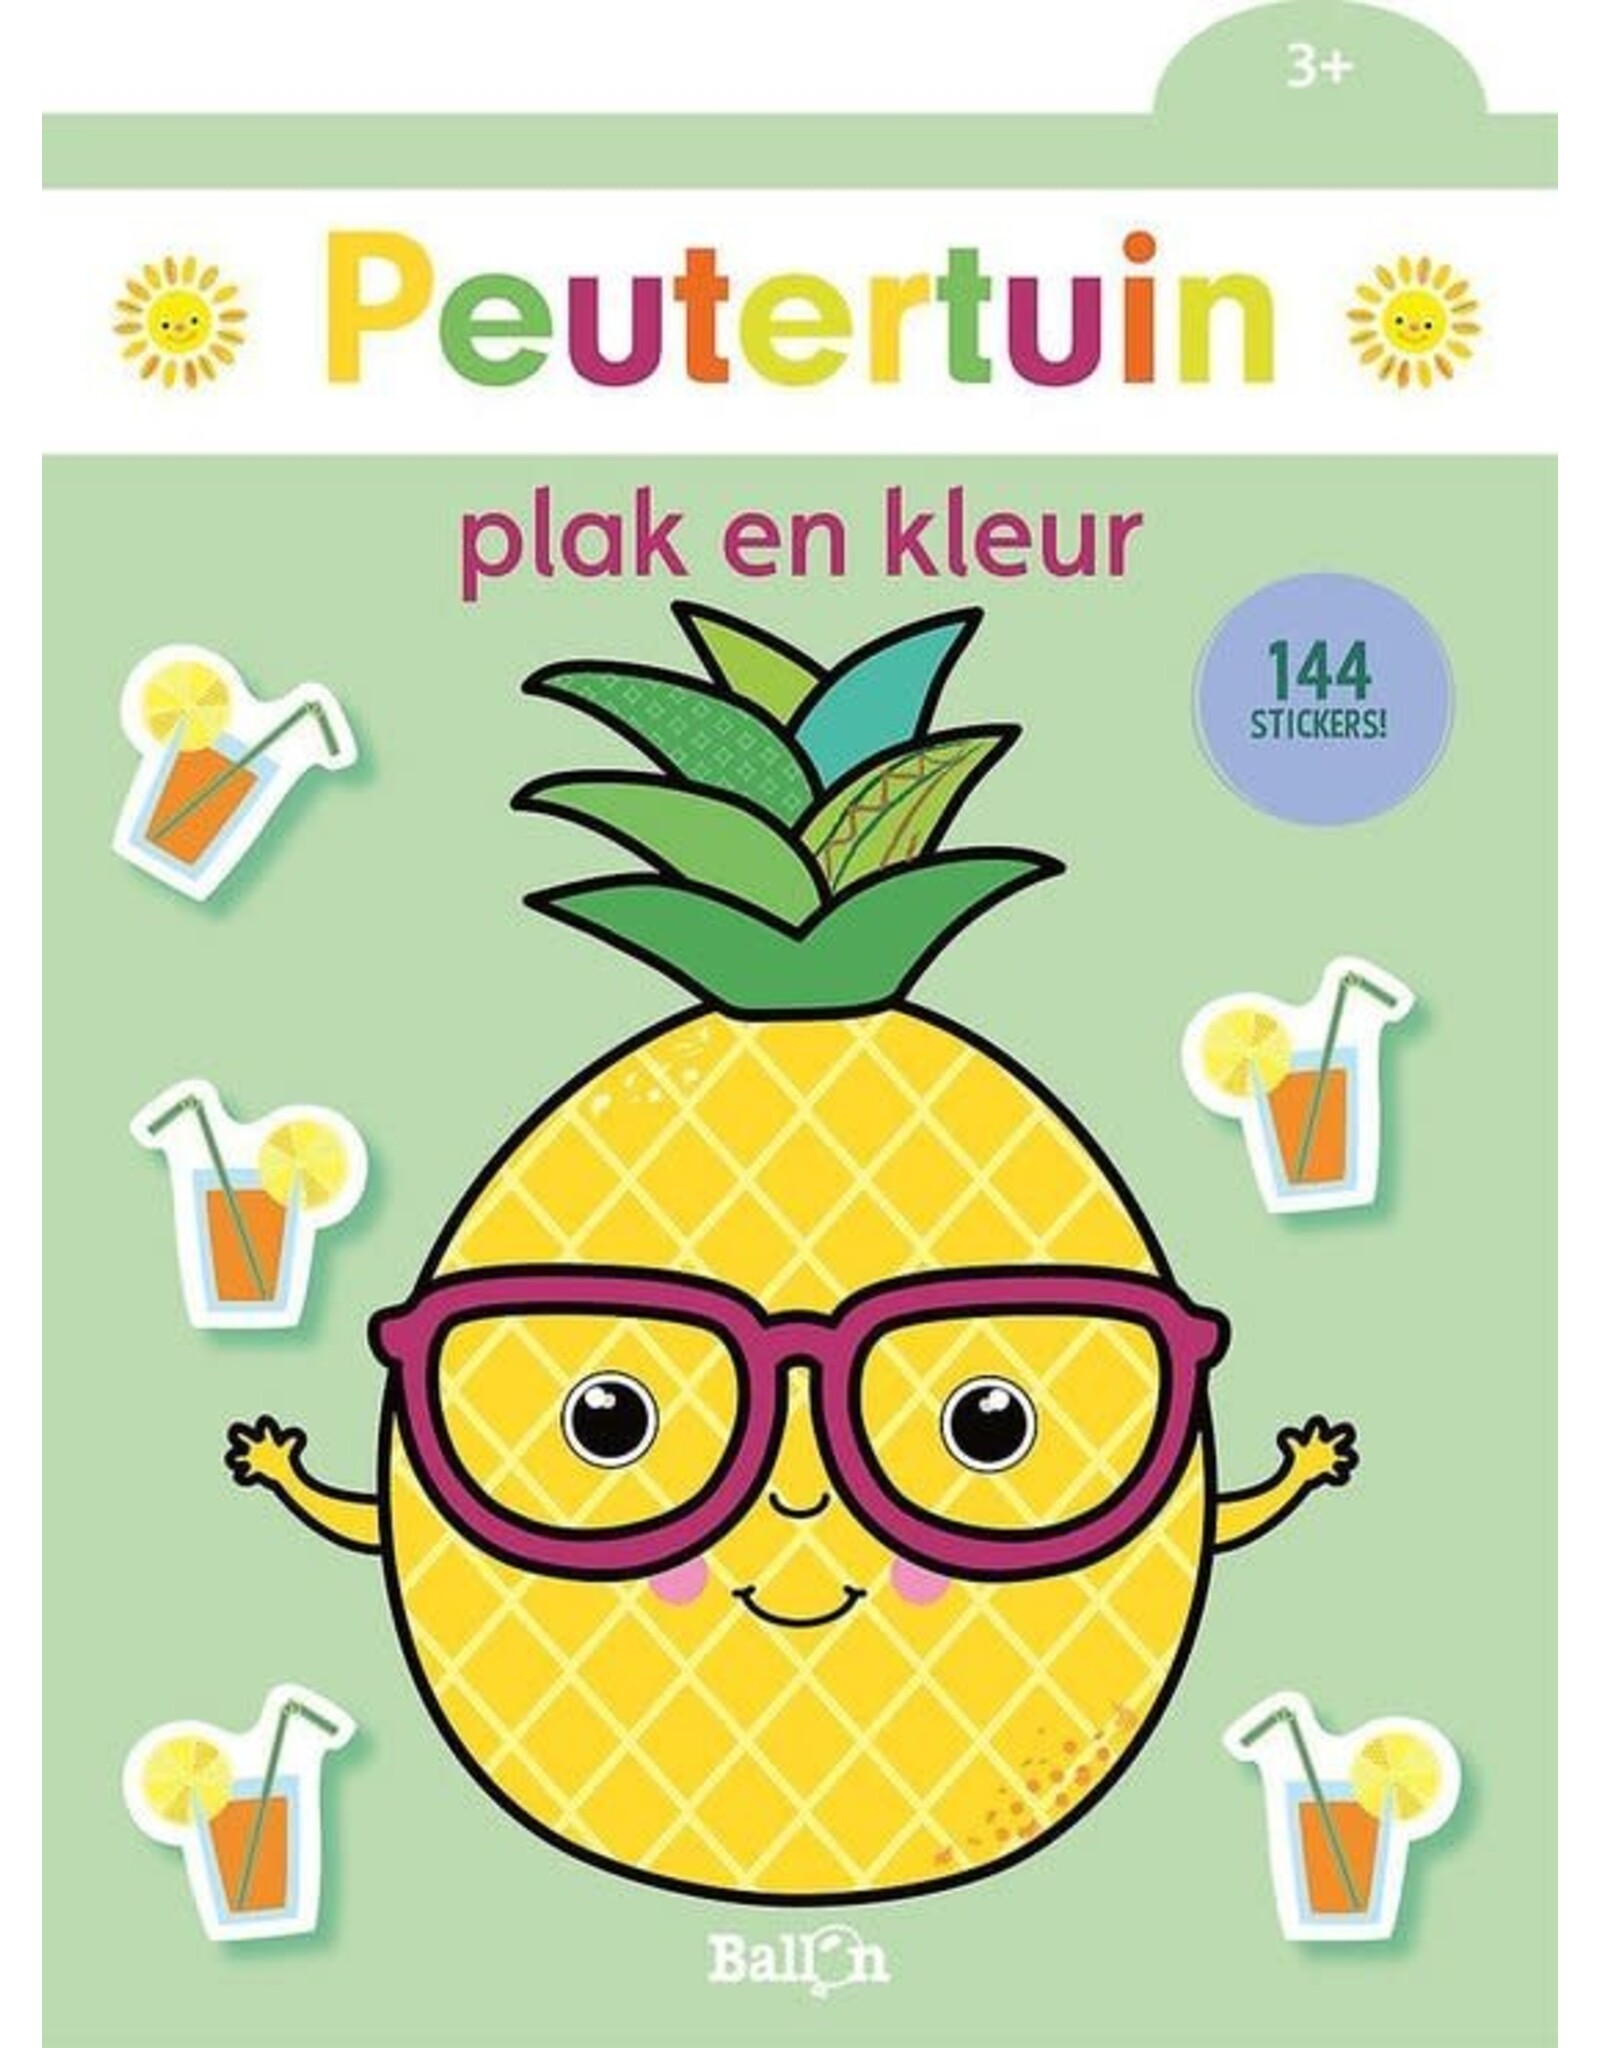 Ballon Peutertuin plak en kleur (ananas) 3+